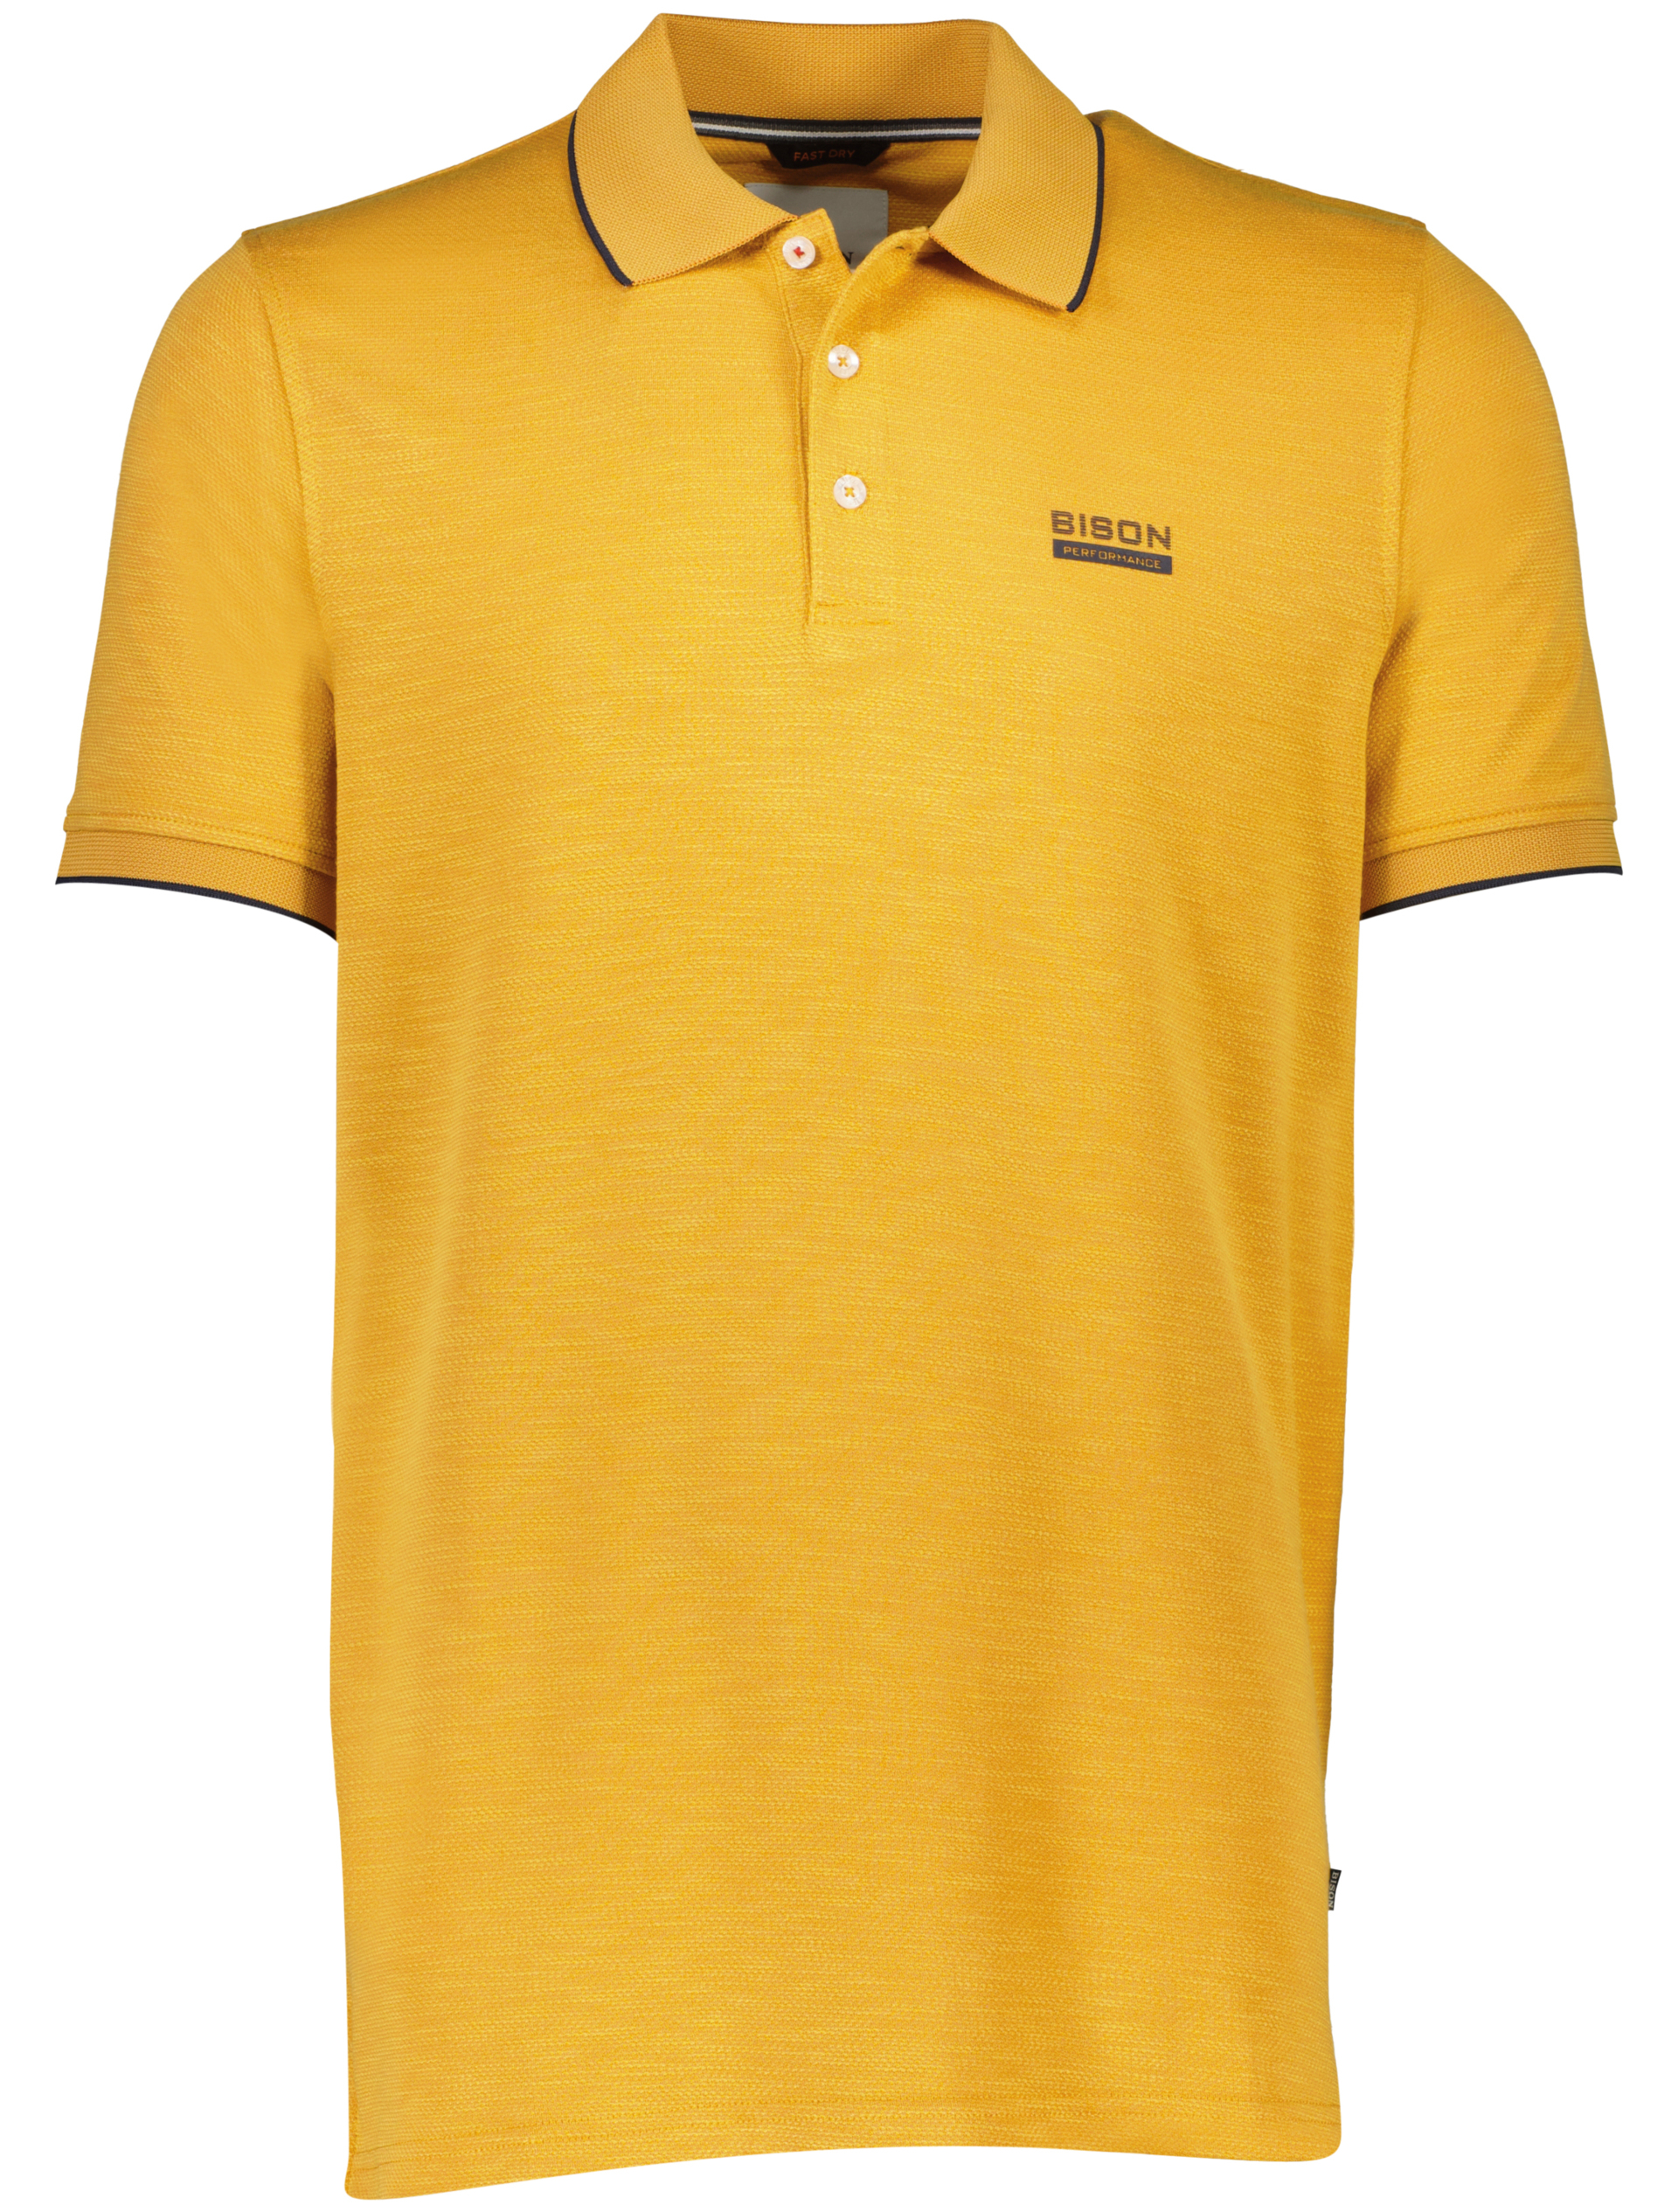 Bison Poloshirt gul / yellow